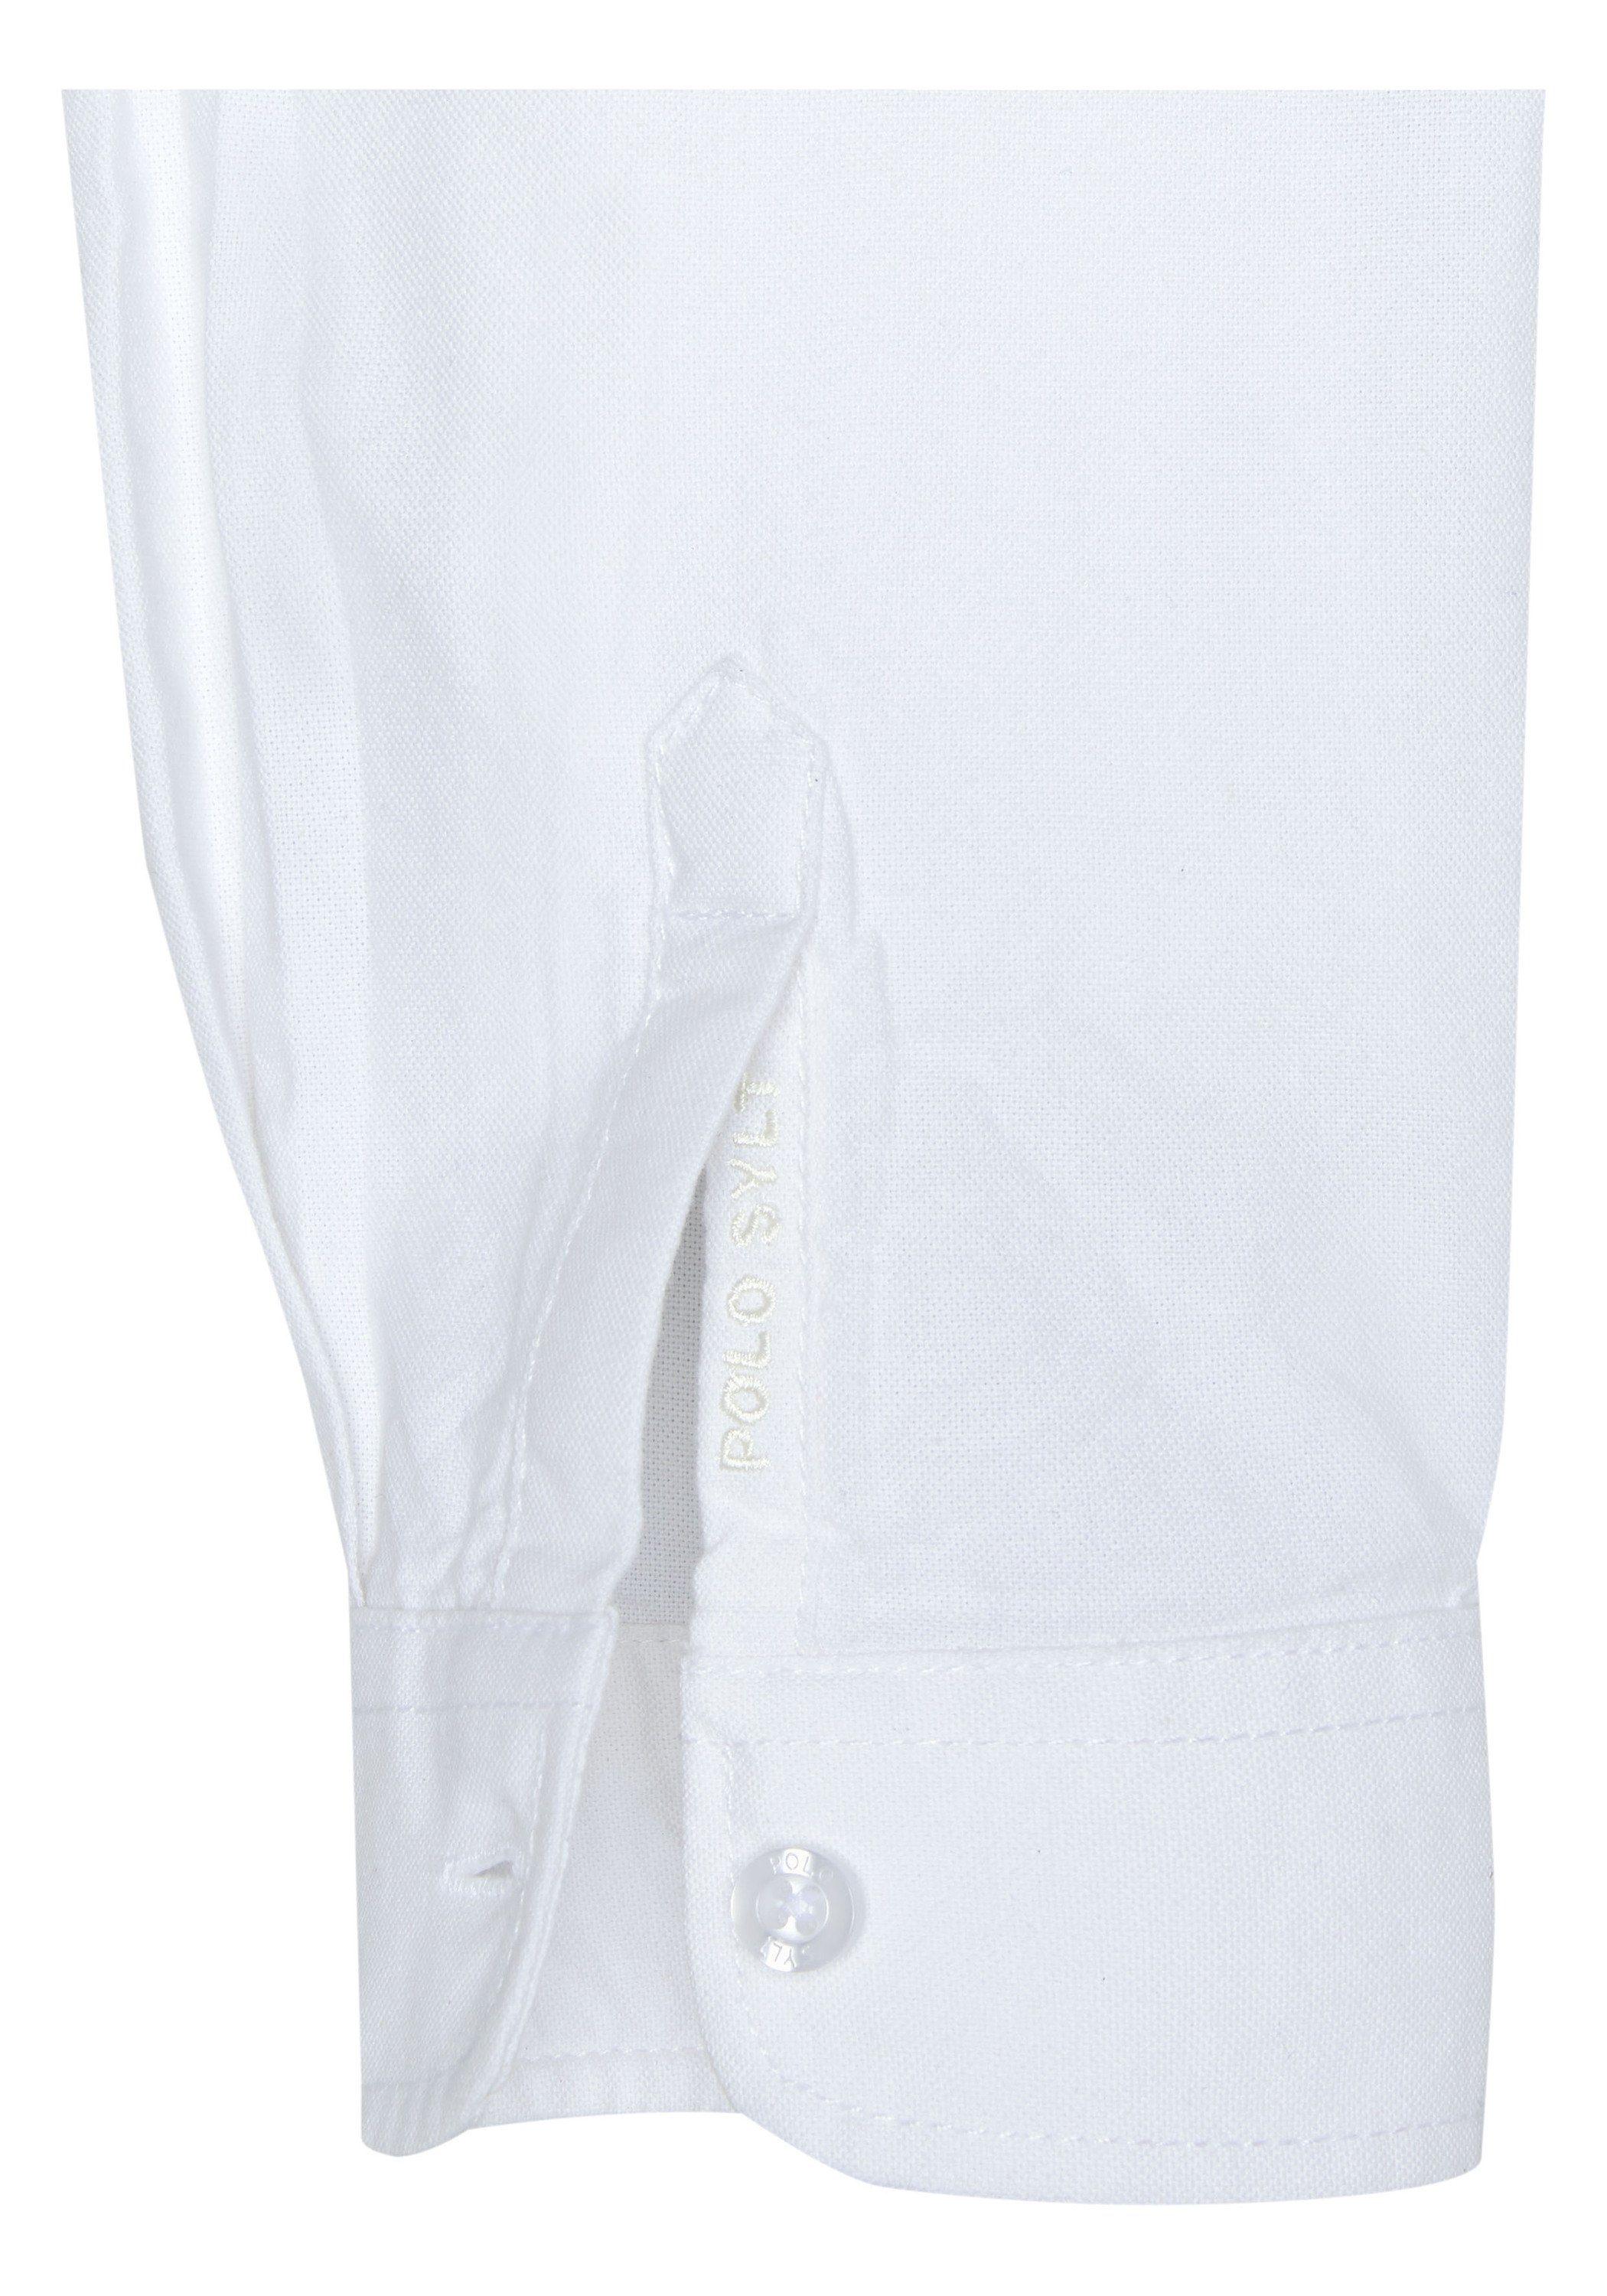 Polo Qualität Sylt Langarmhemd aus weiß Oxford